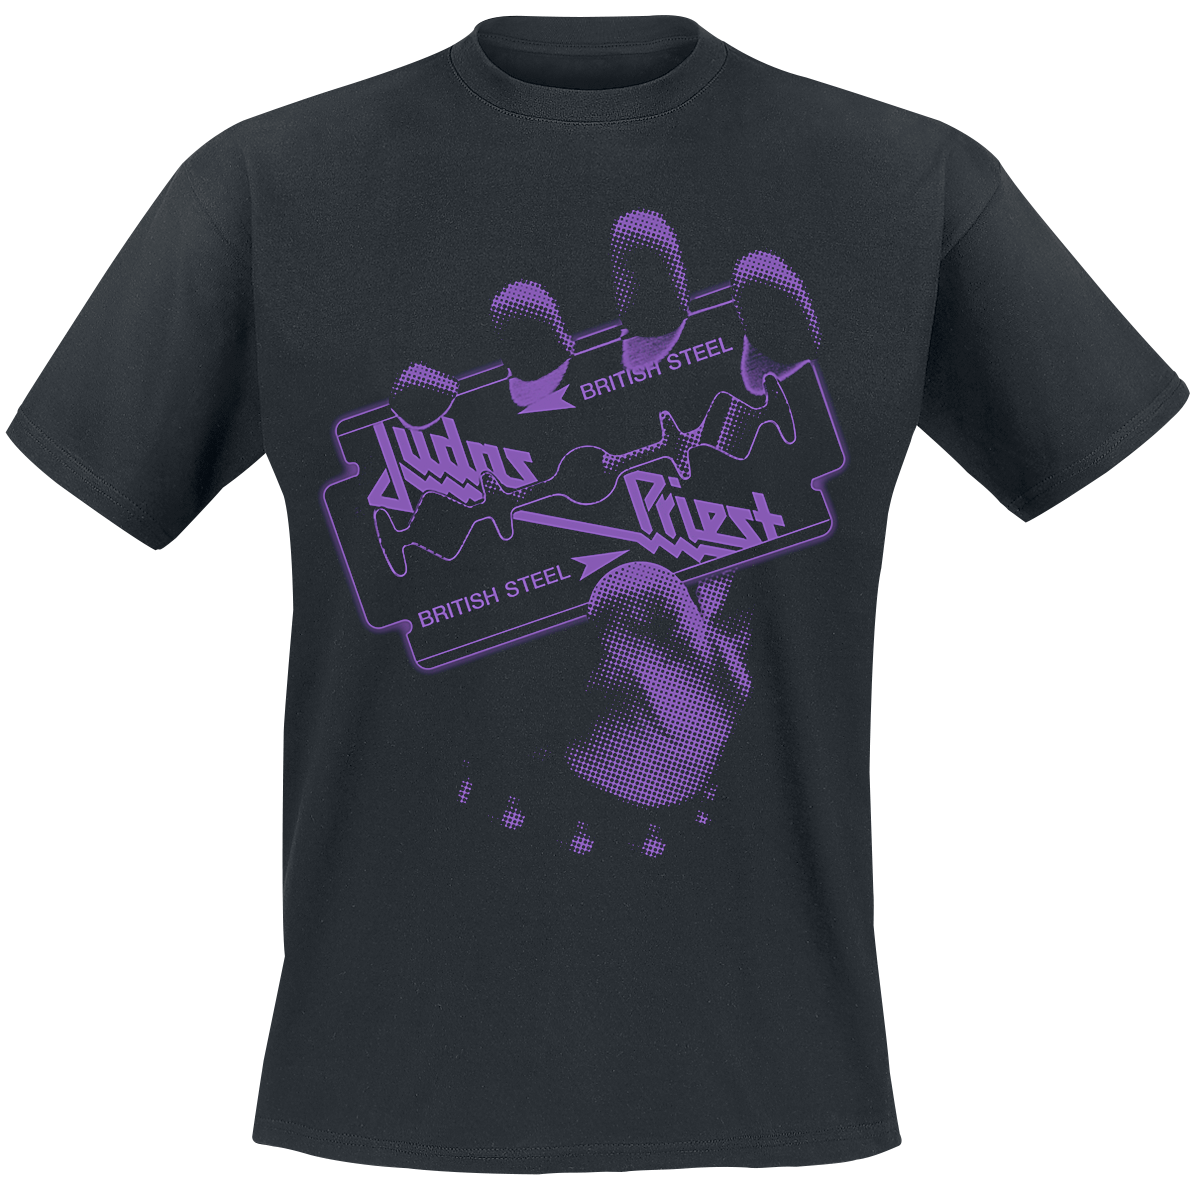 Judas Priest - Hand Purple - T-Shirt - black image